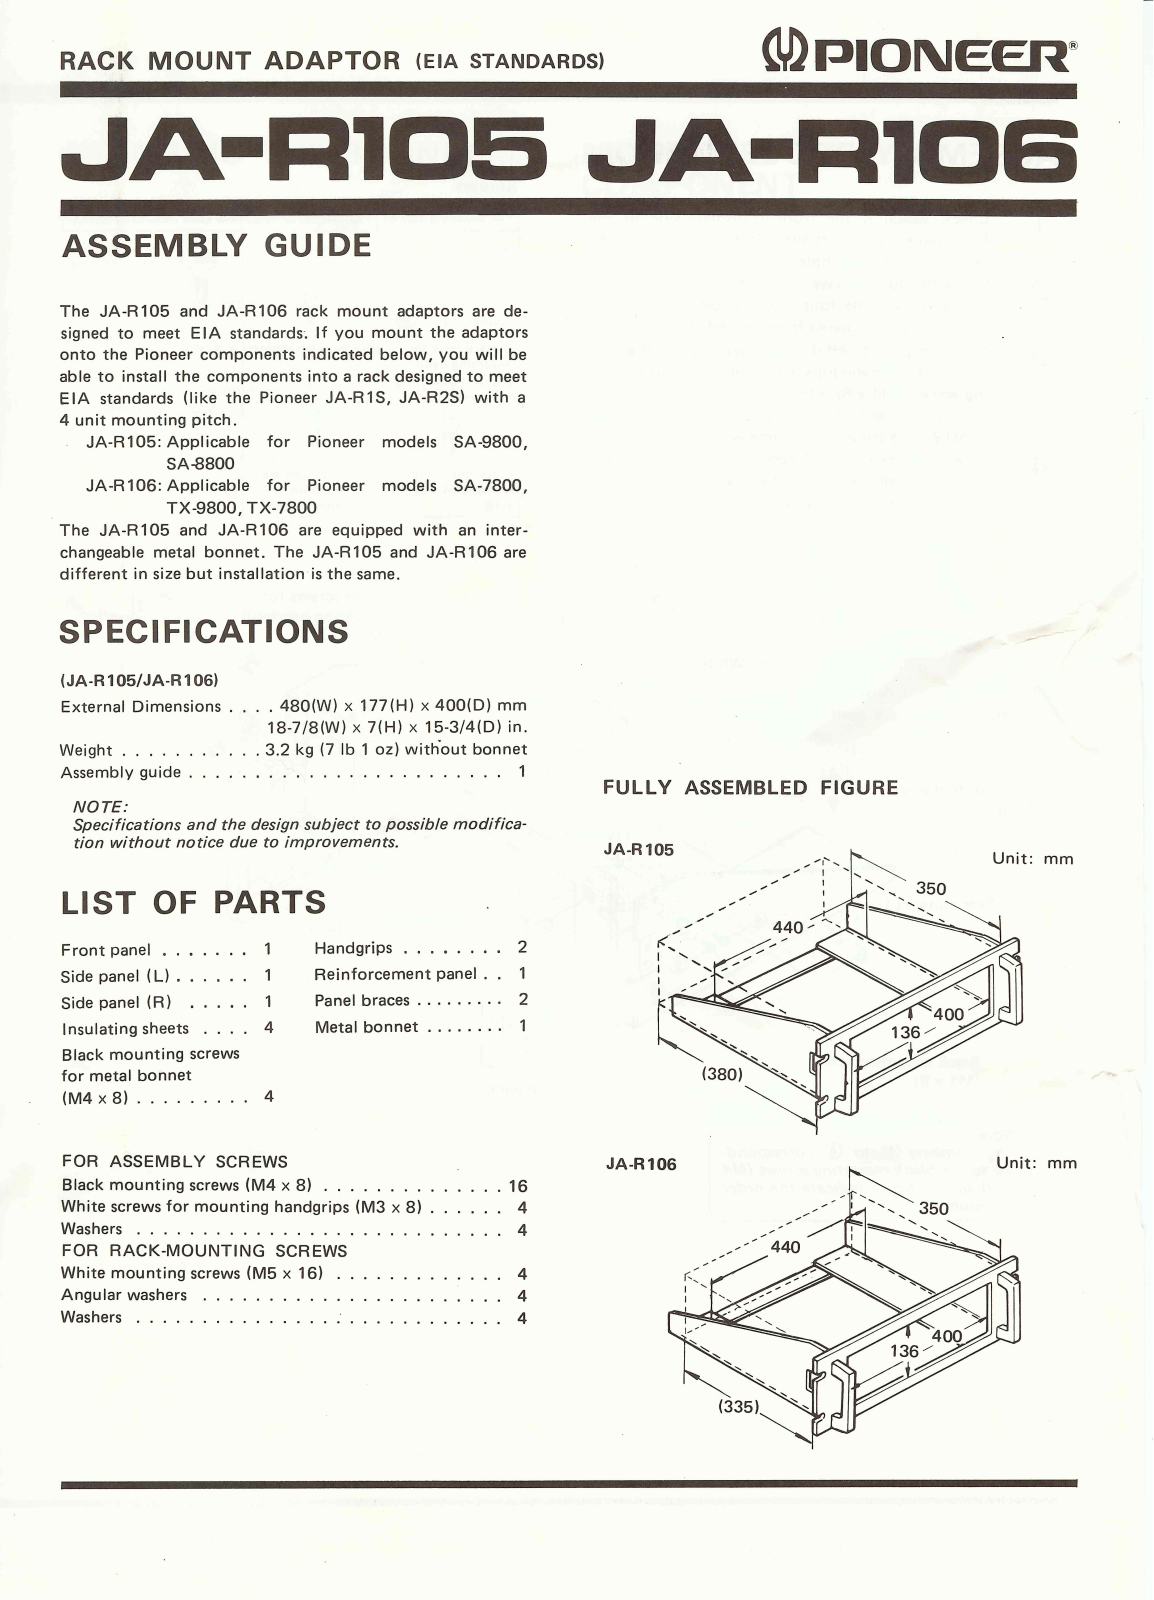 Pioneer JA-R106, JA-R105 Assembly Guide